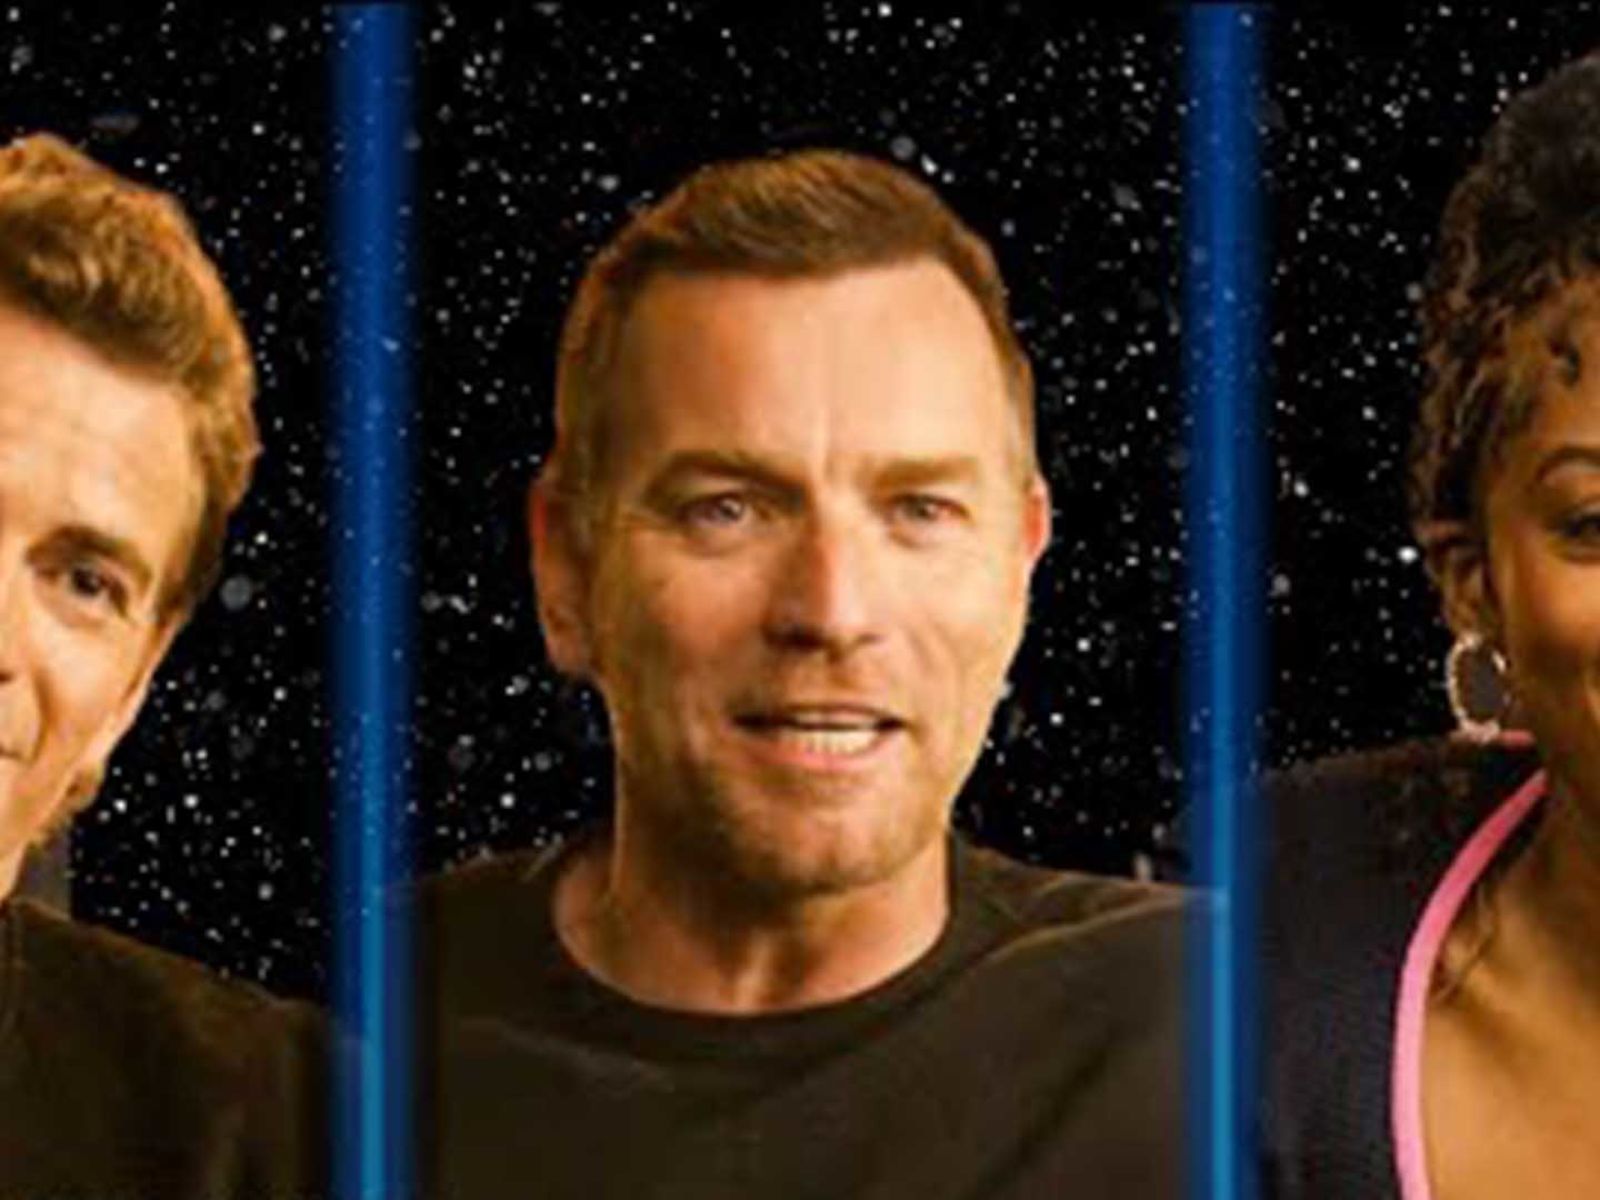 Ewan McGregor, Hayden Christensen y Moses Ingram responden 7 preguntas sobre Star Wars